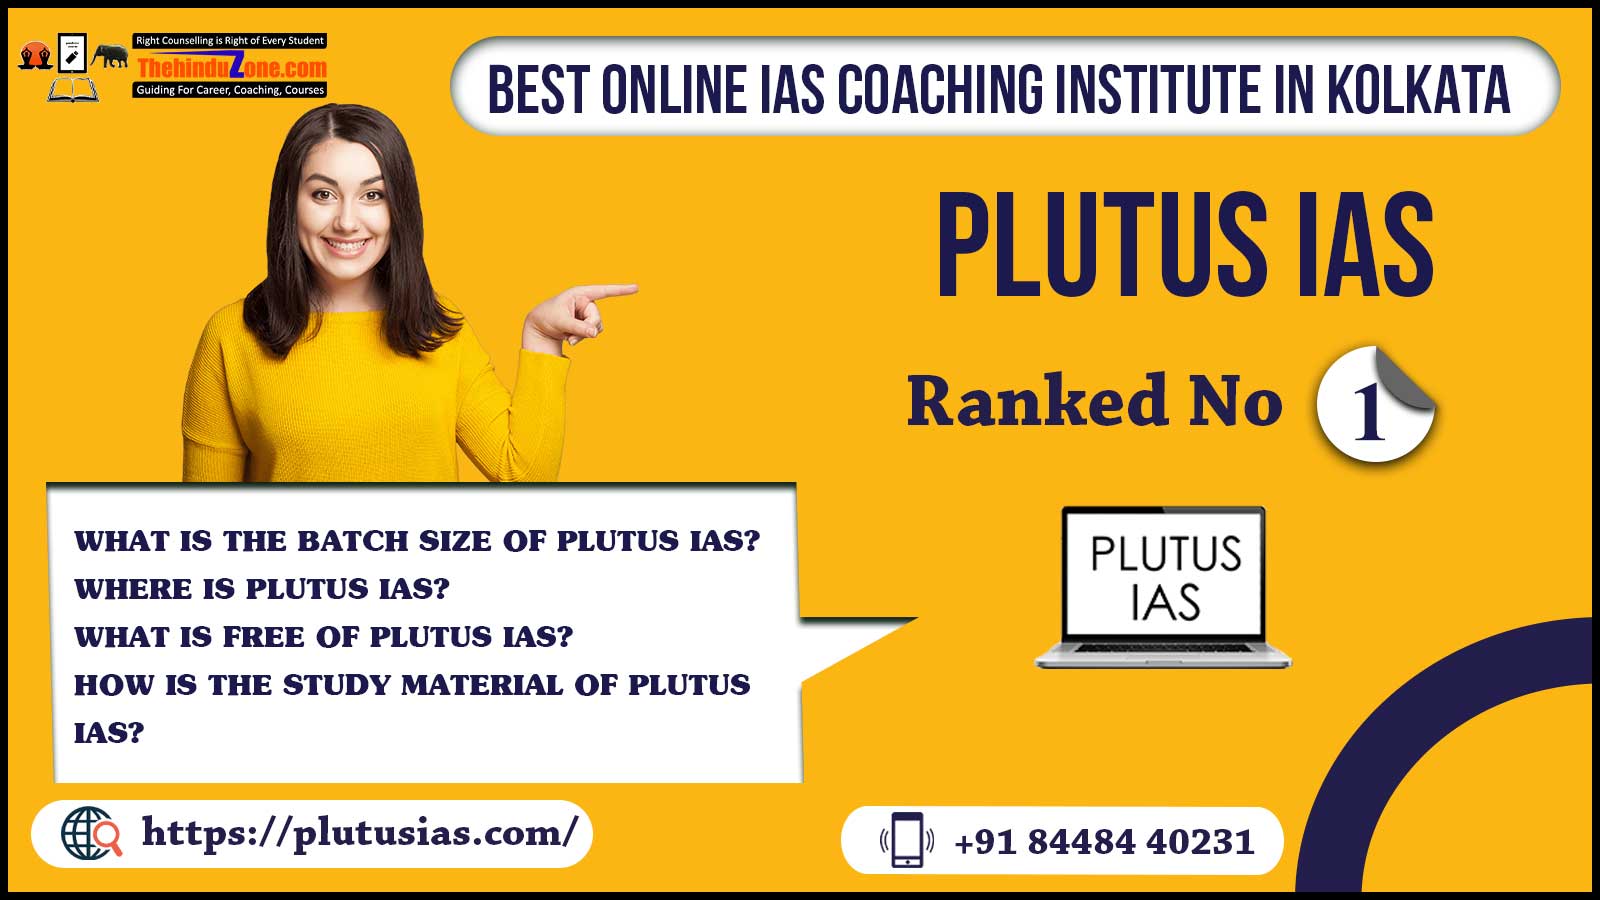 PLUTUS Online ias coaching In Kolkata